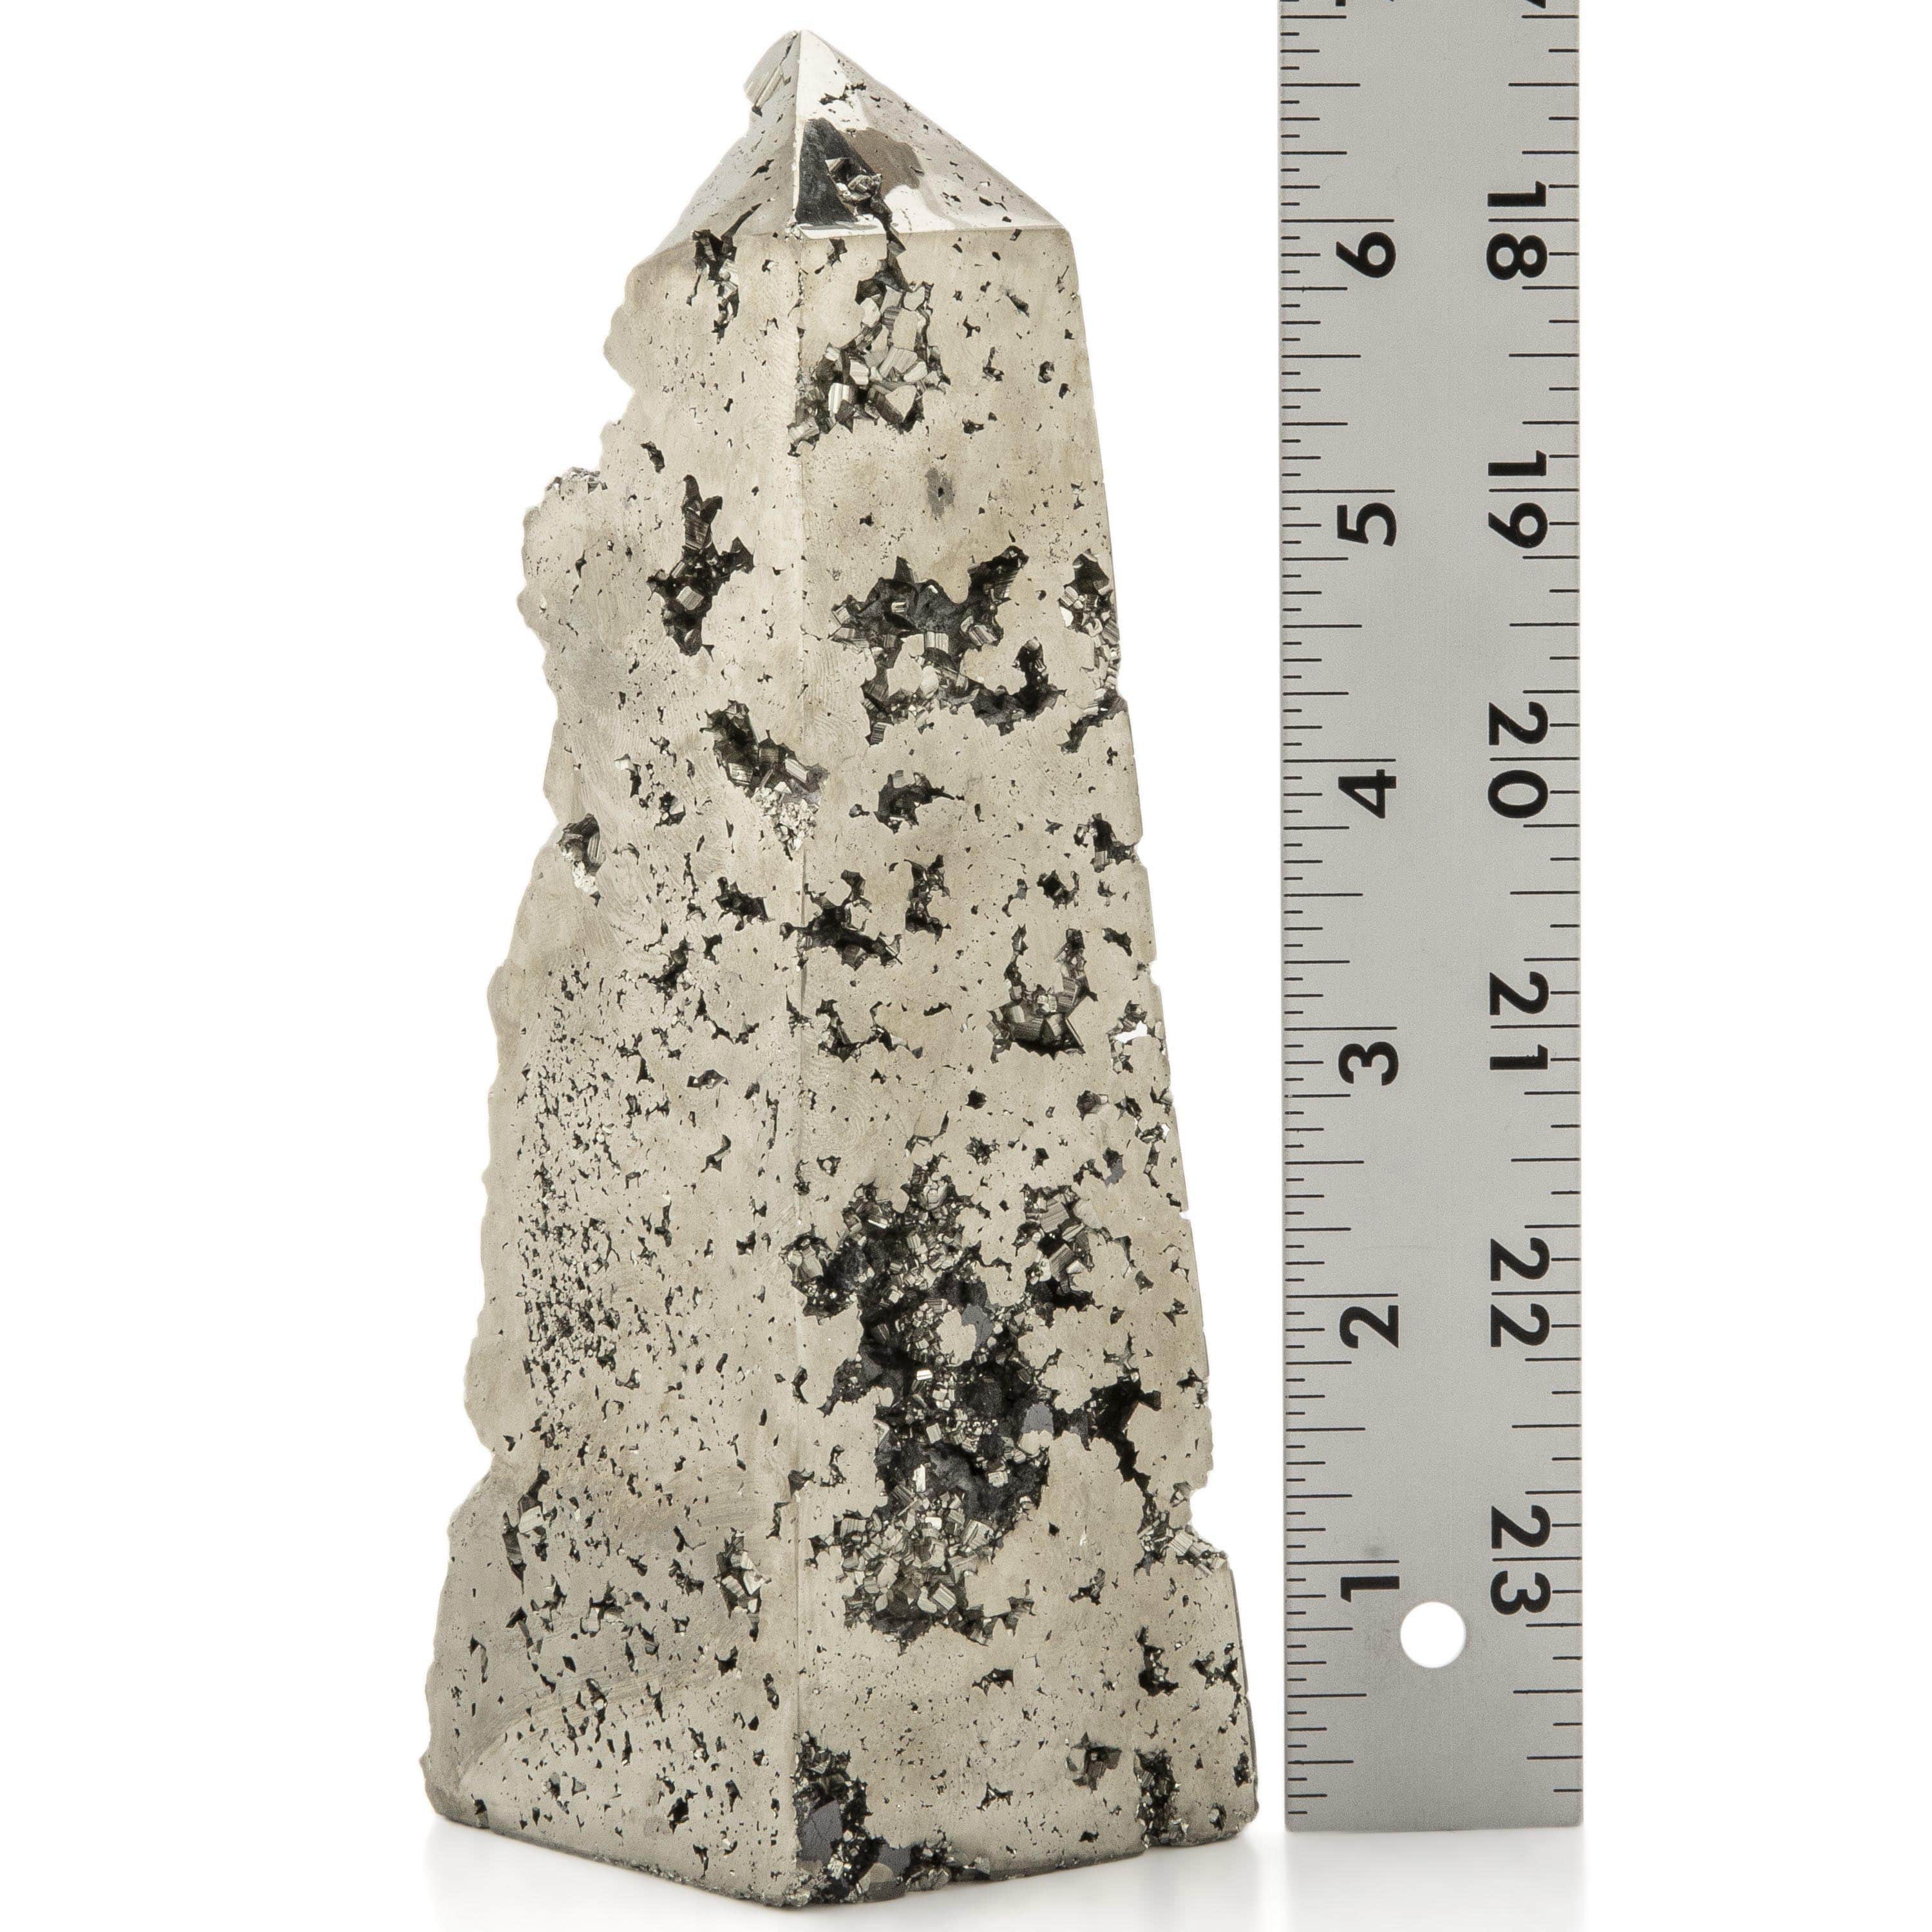 Kalifano Pyrite Pyrite Obelisk Carving 7" / 1,280 grams OB2200-PC.002